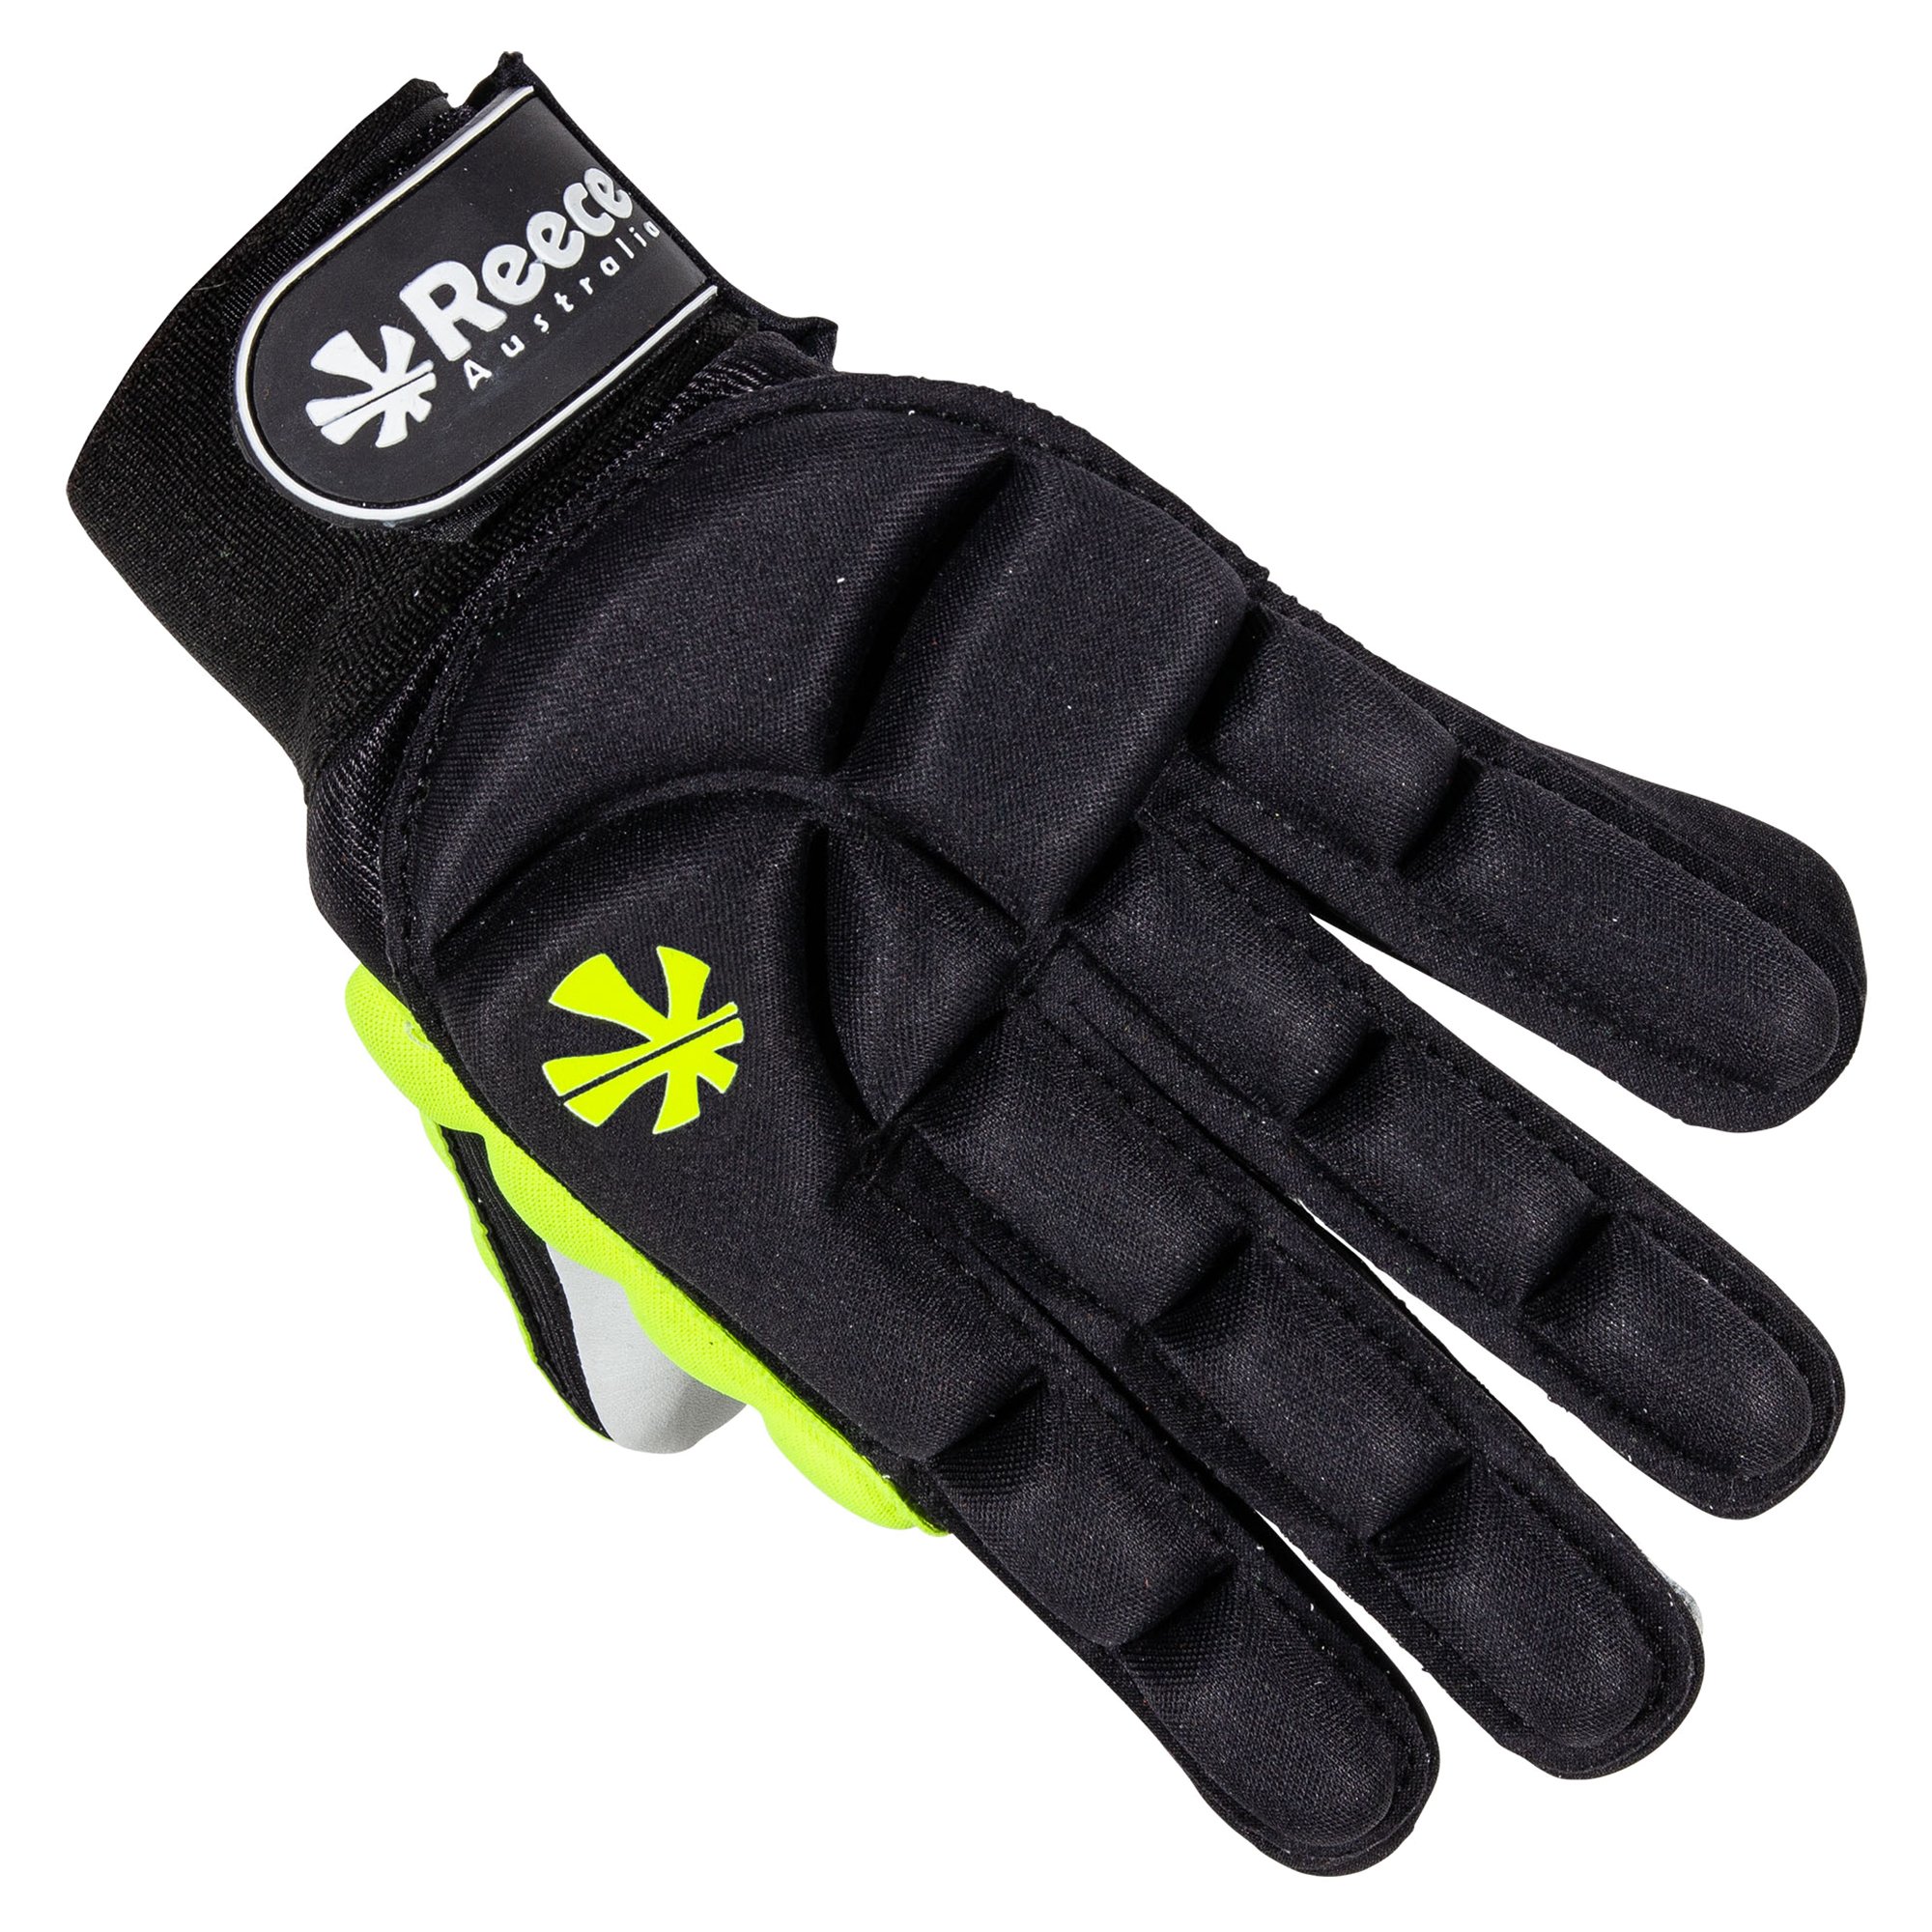 Reece Australia Force Protection Glove Slim Fit